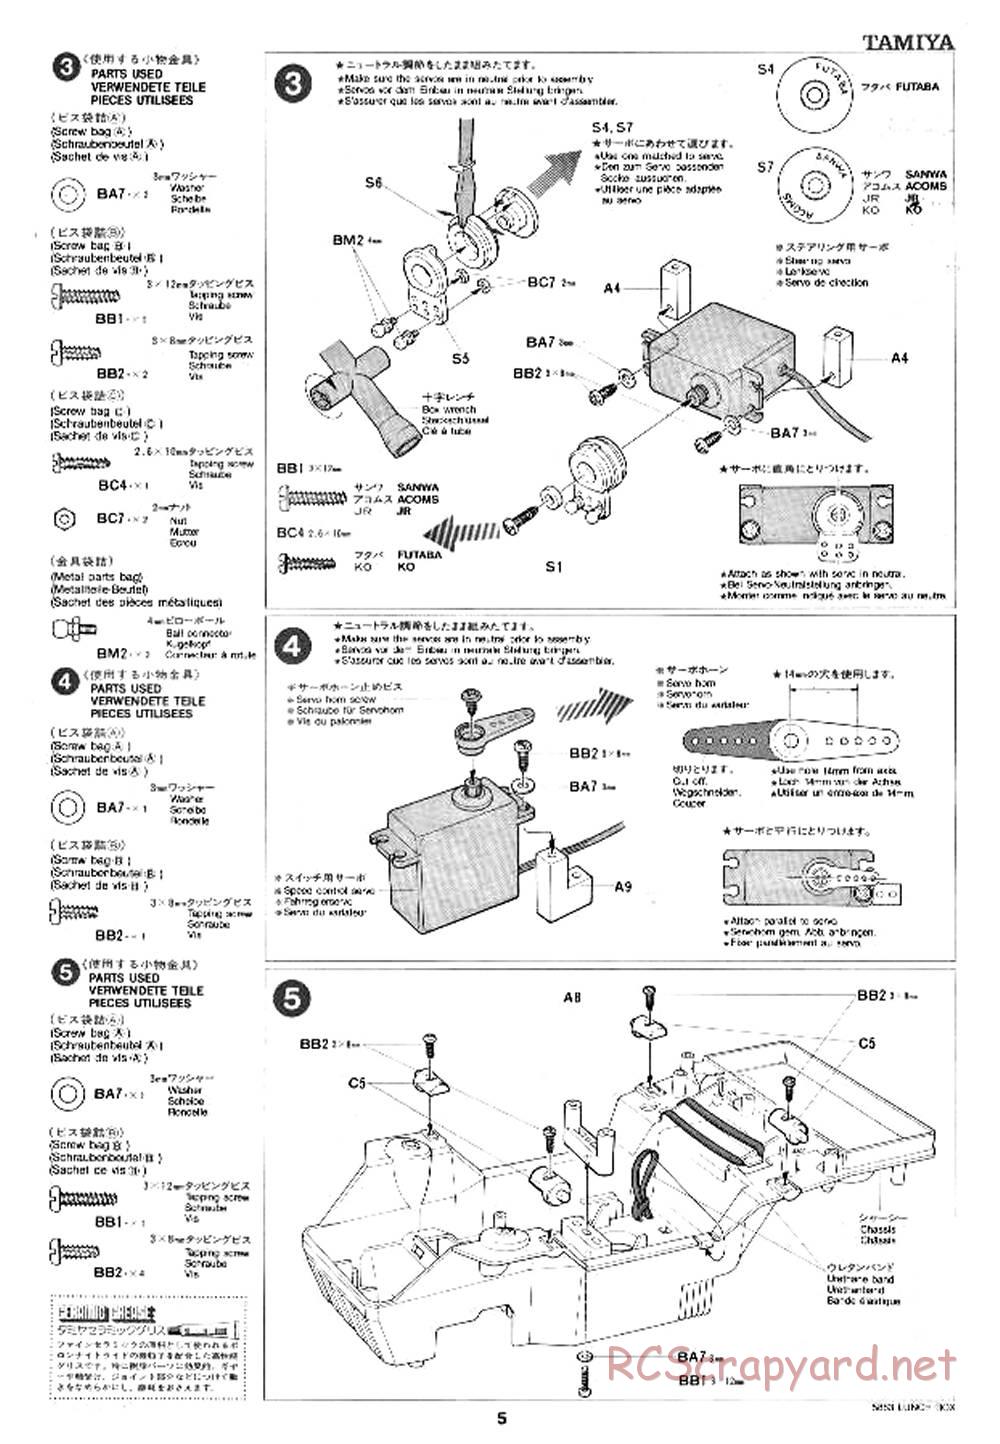 Tamiya - Lunchbox - 58063 - Manual - Page 5